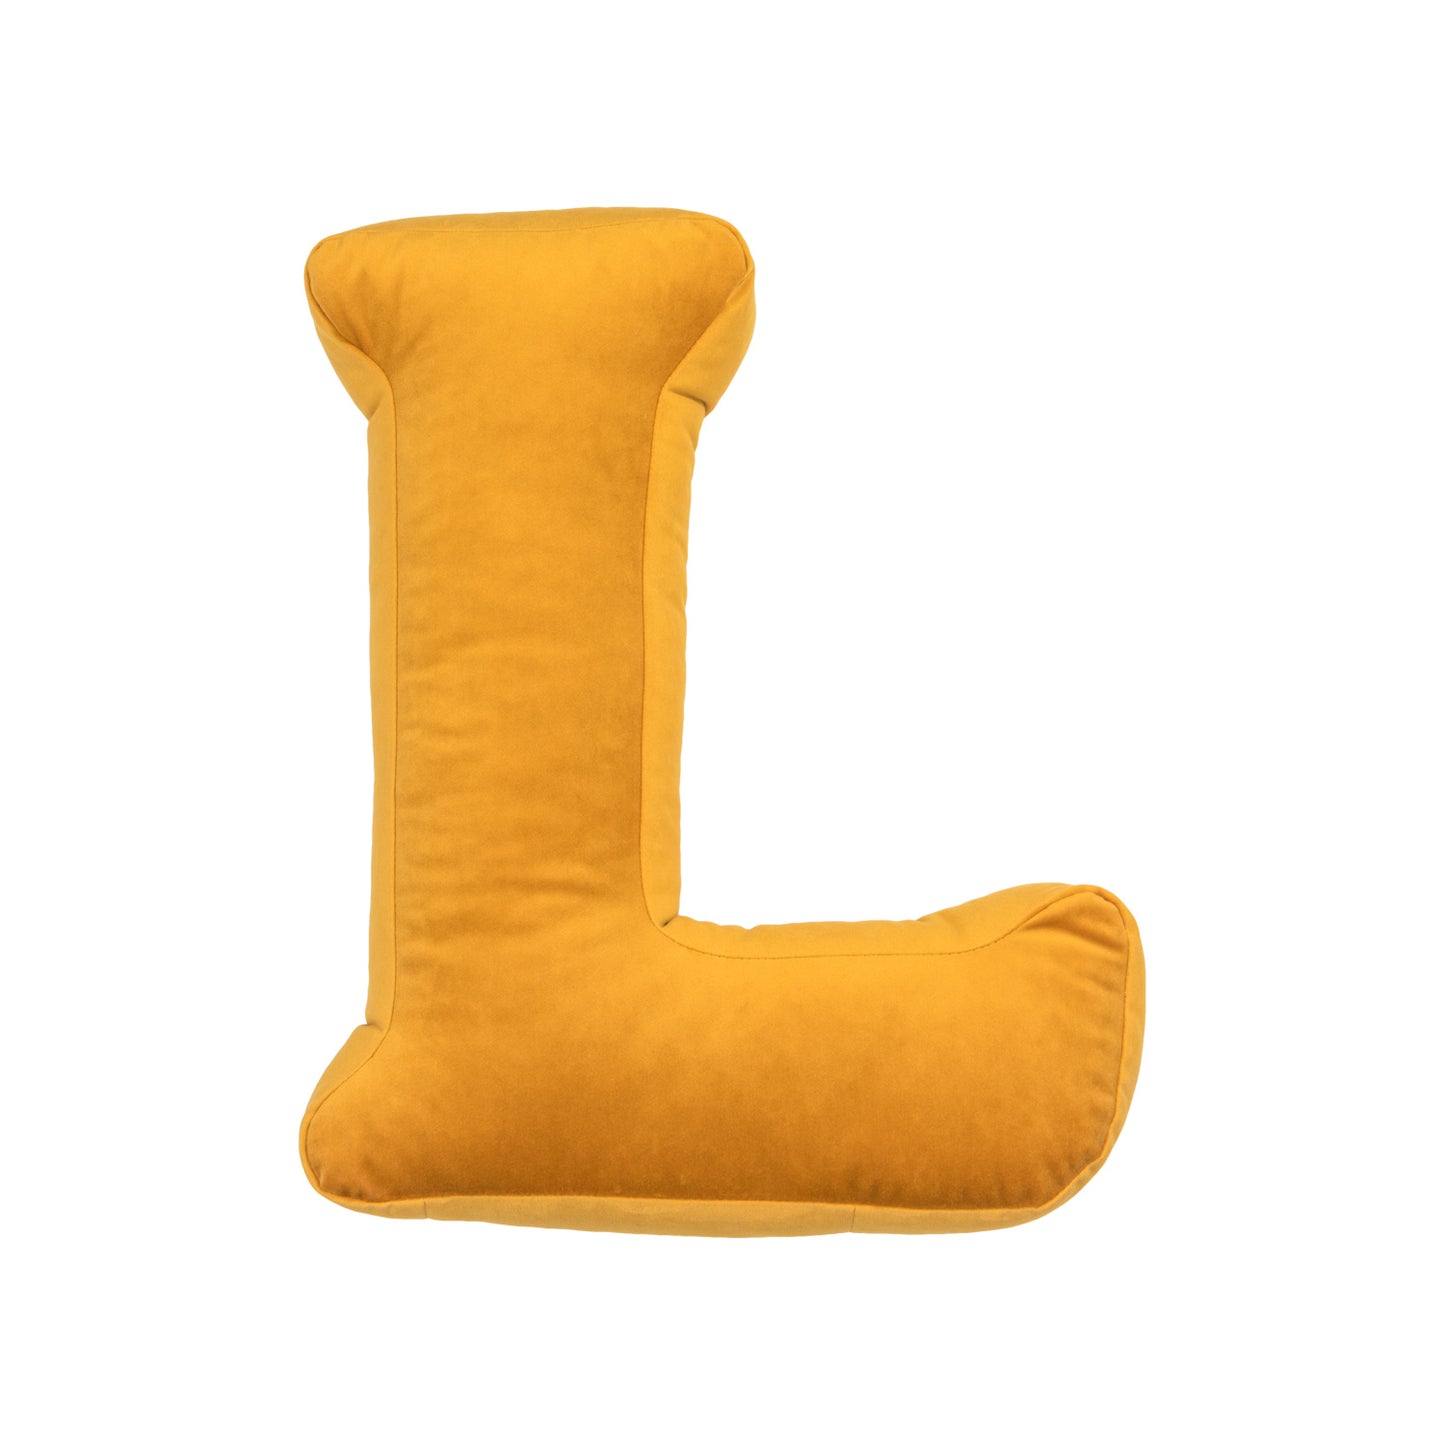 Poduszki literka welurowa L żółta od Bettys Home